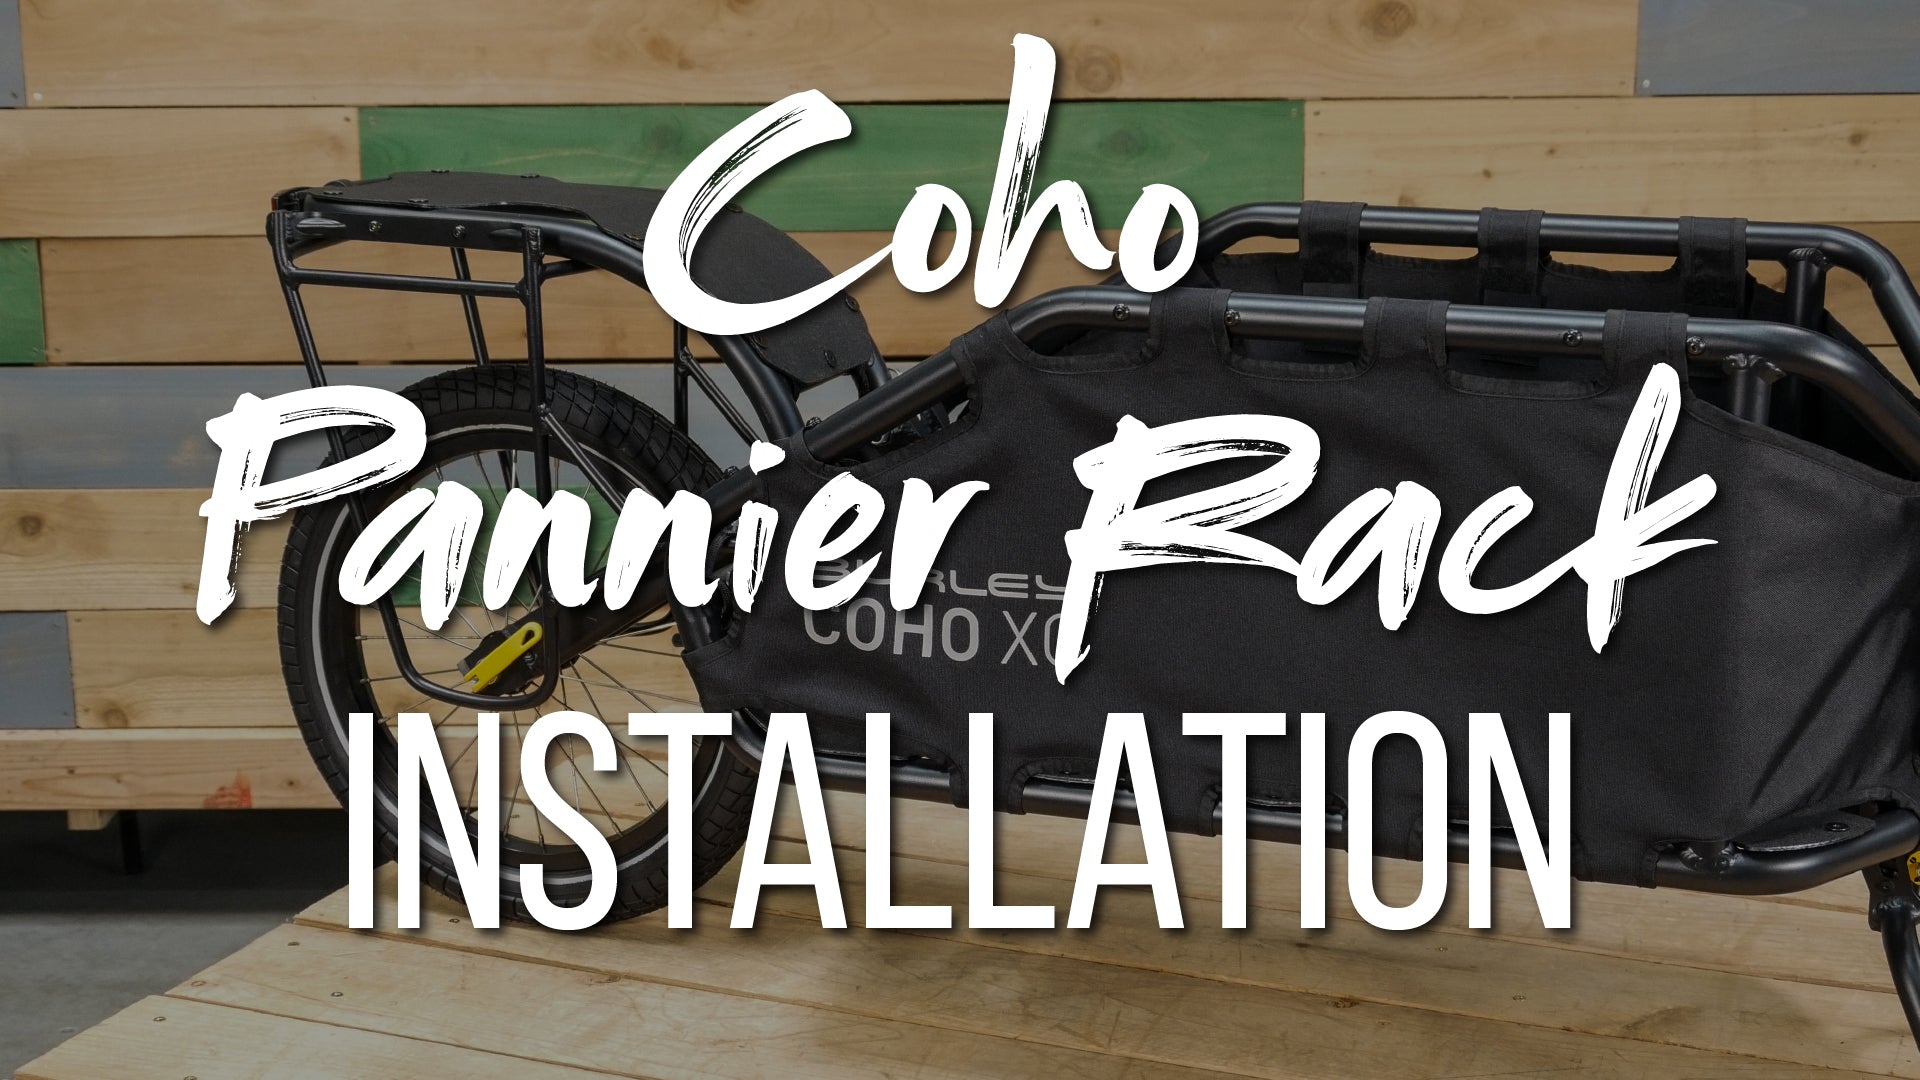 Coho Pannier Rack Installation